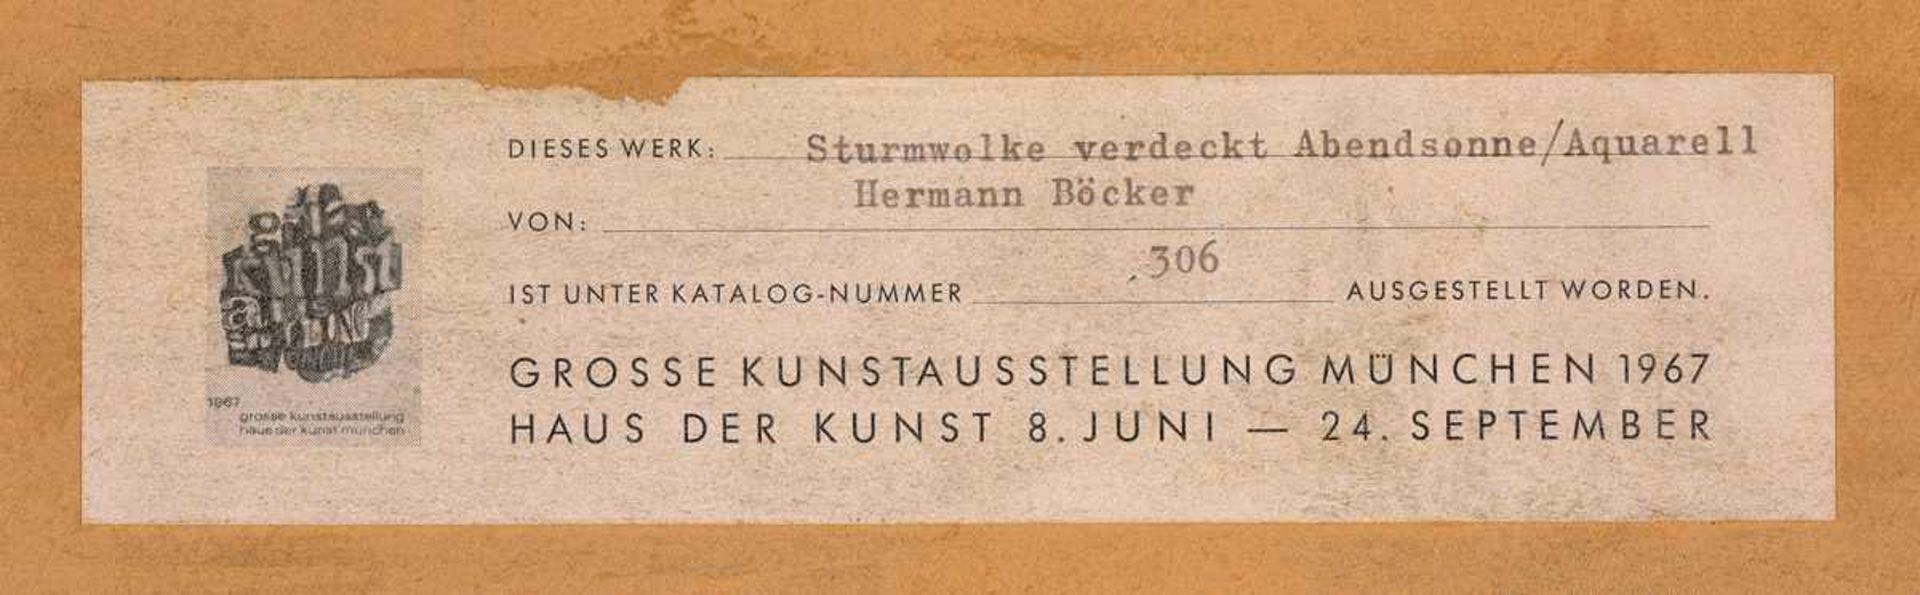 Böcker, Hermann 1890 Oldenburg - 1978 München - Image 3 of 3